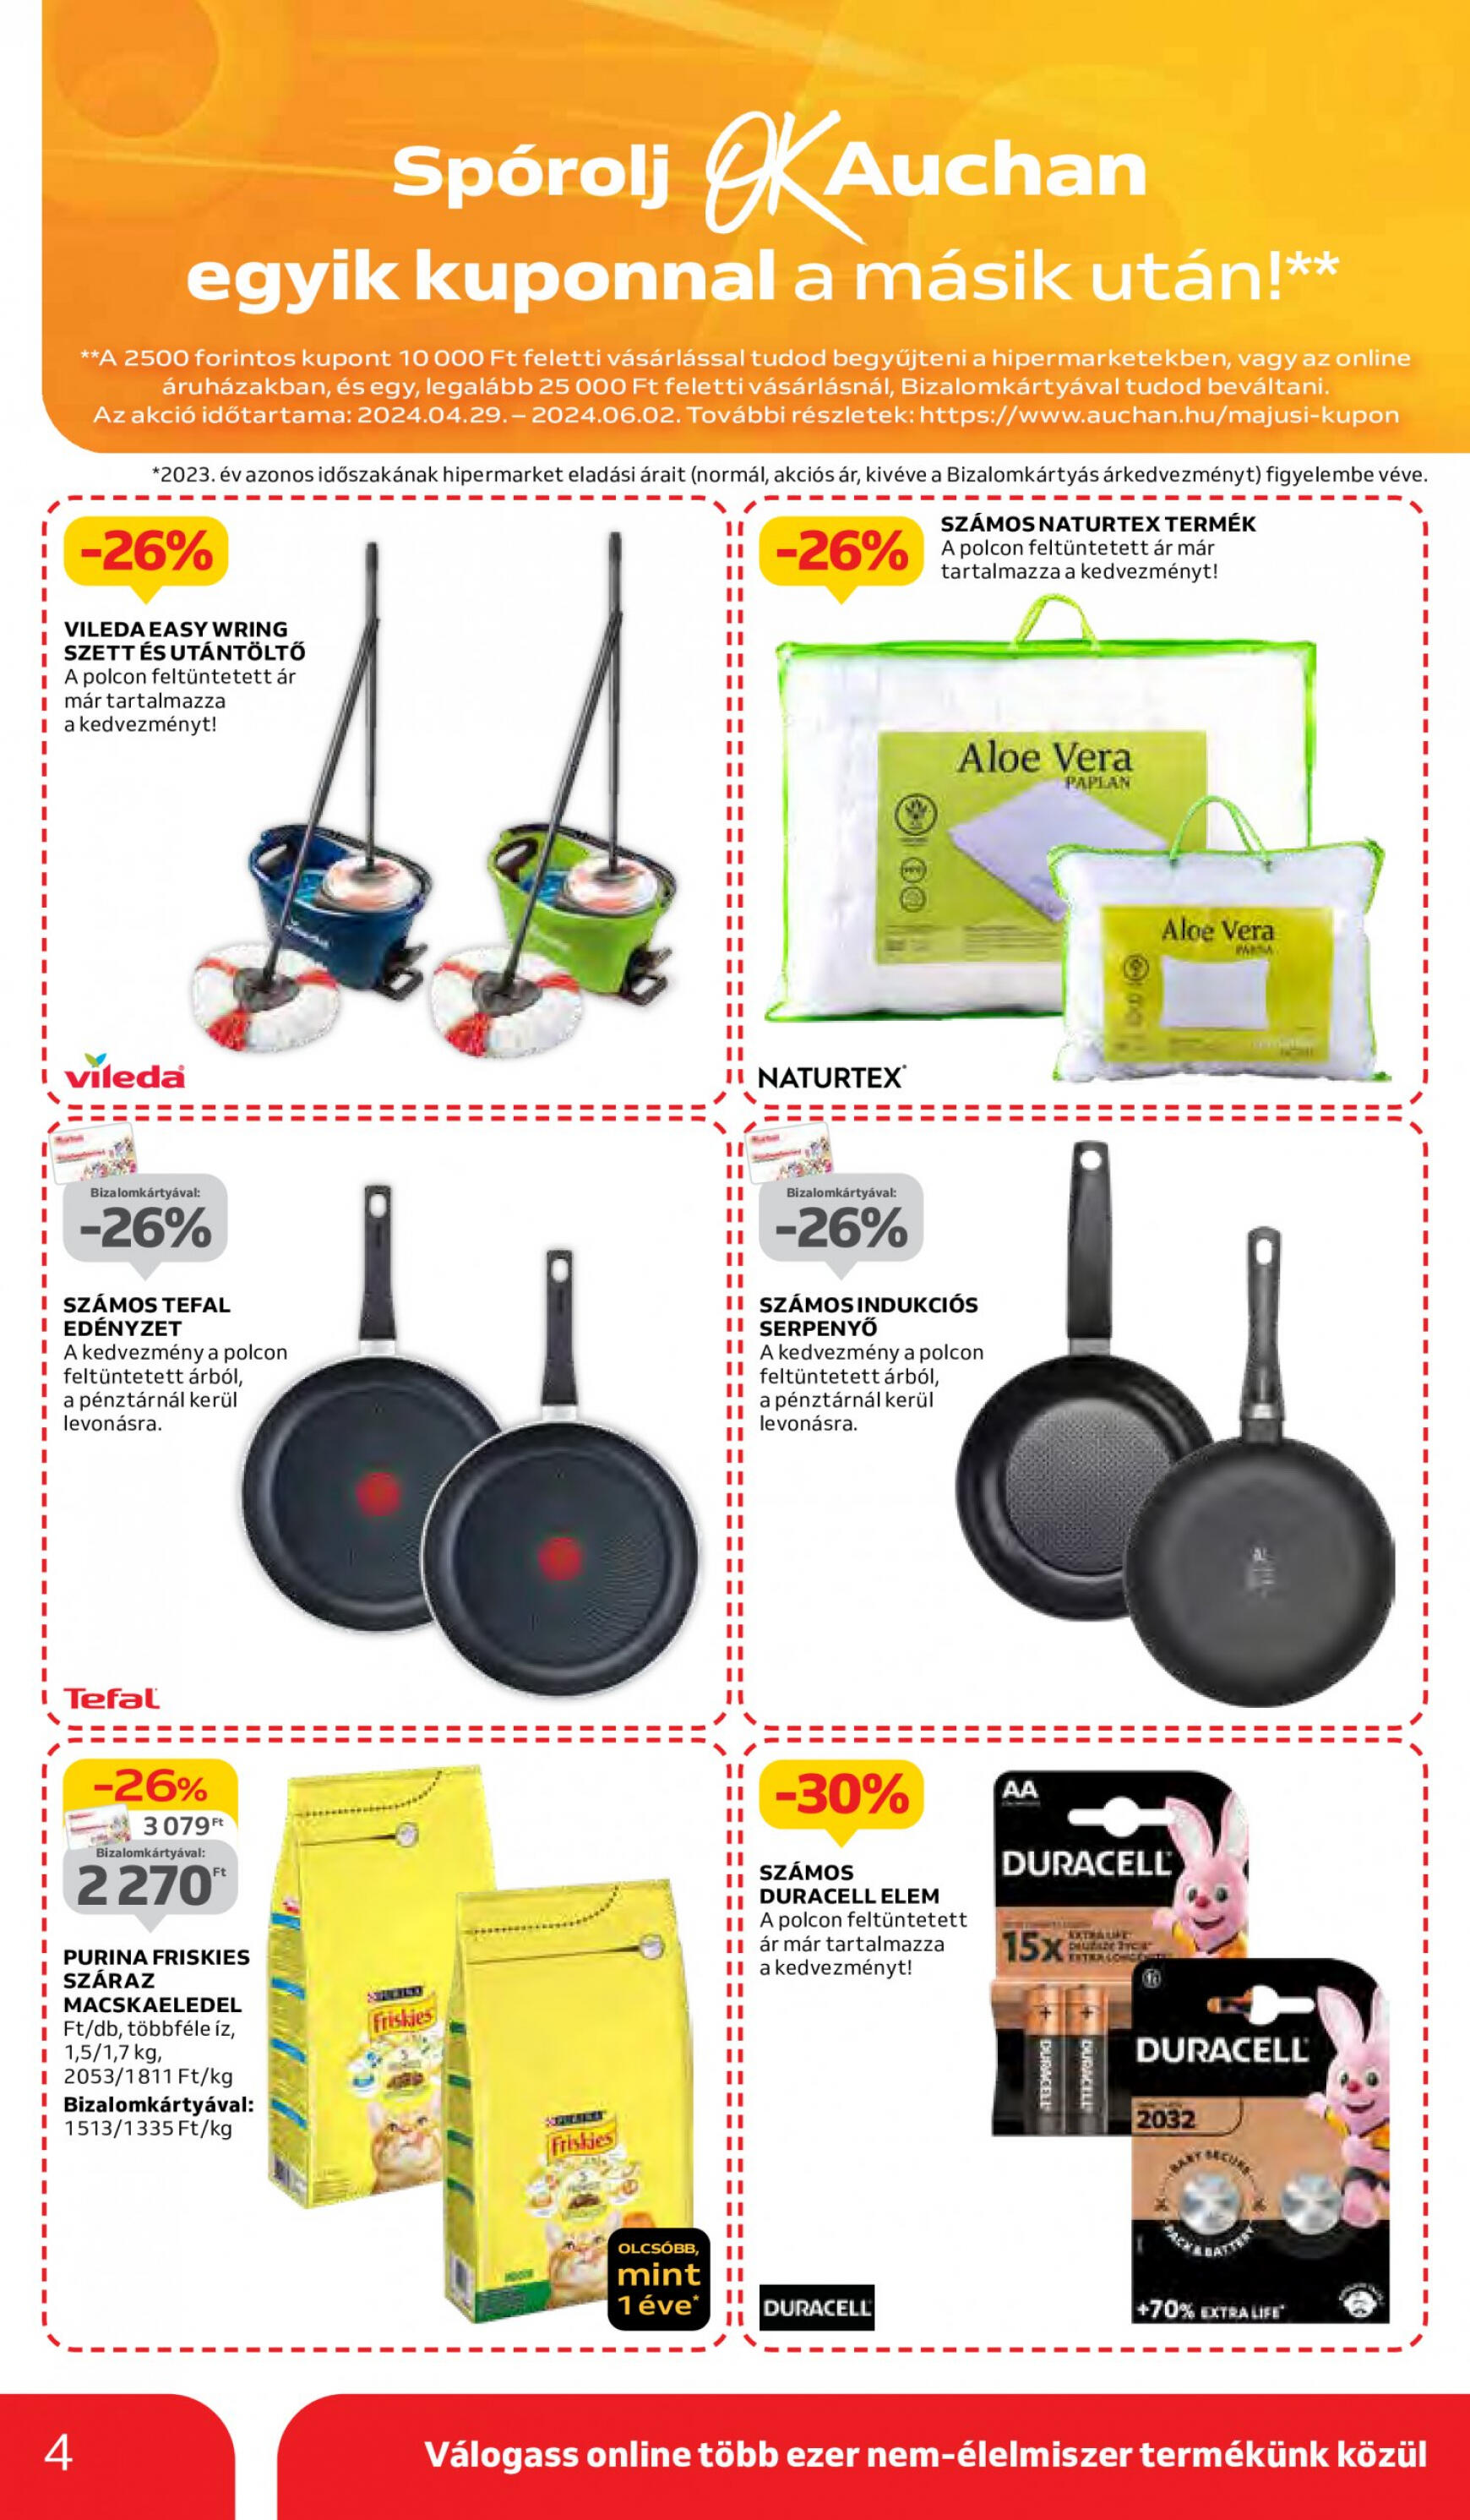 auchan - Aktuális újság Auchan 05.02. - 05.08. - page: 4